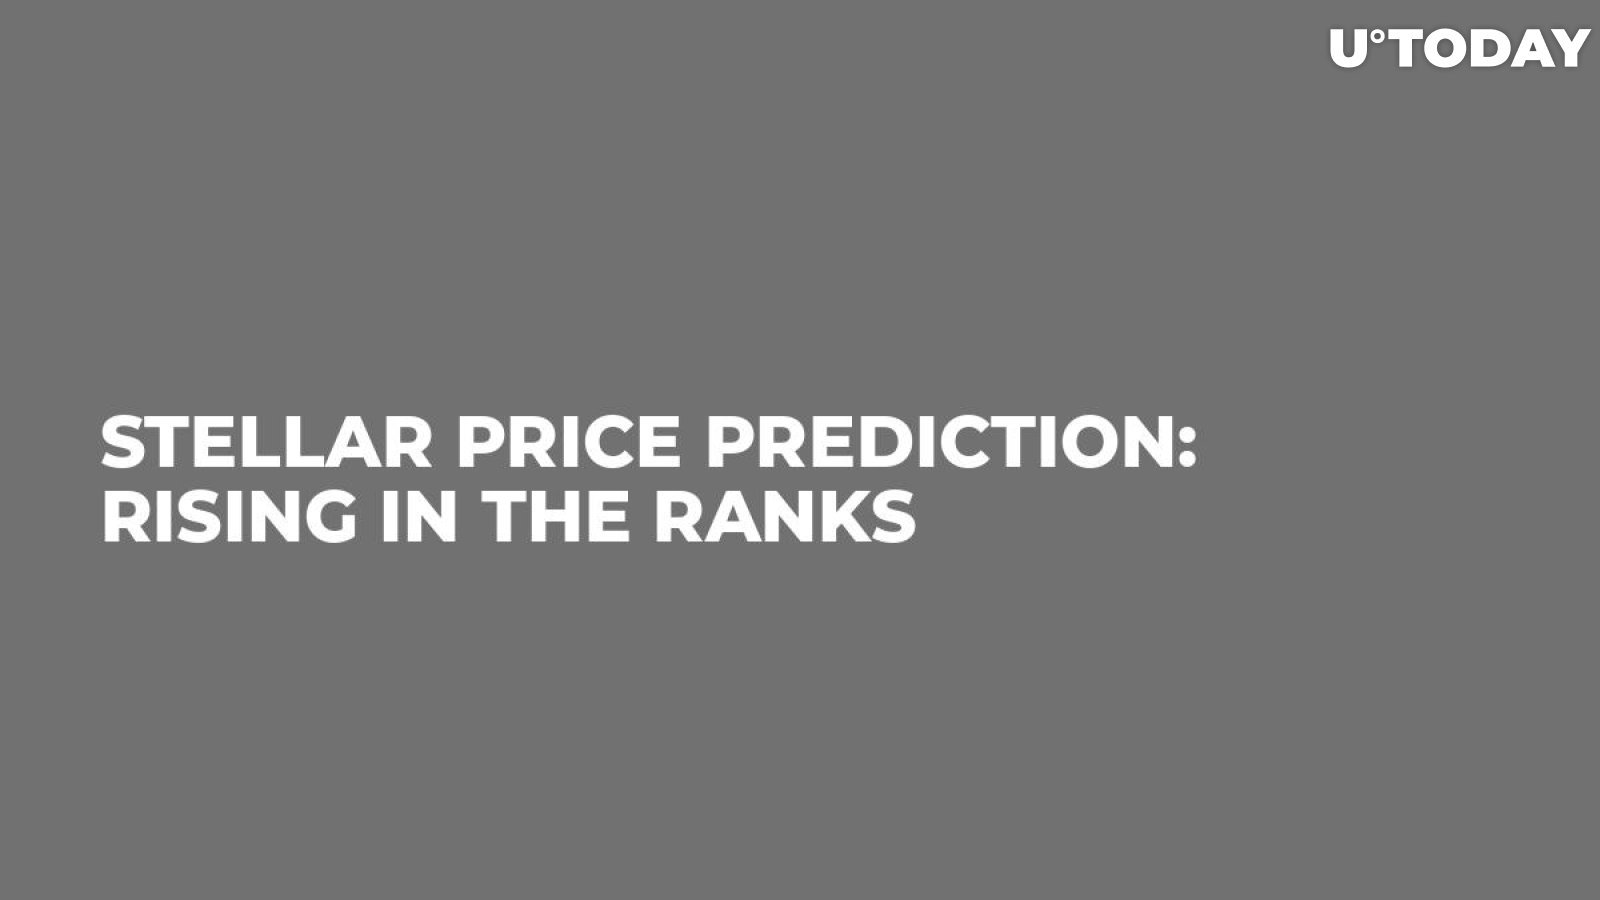 Stellar Price Prediction: Rising in the Ranks